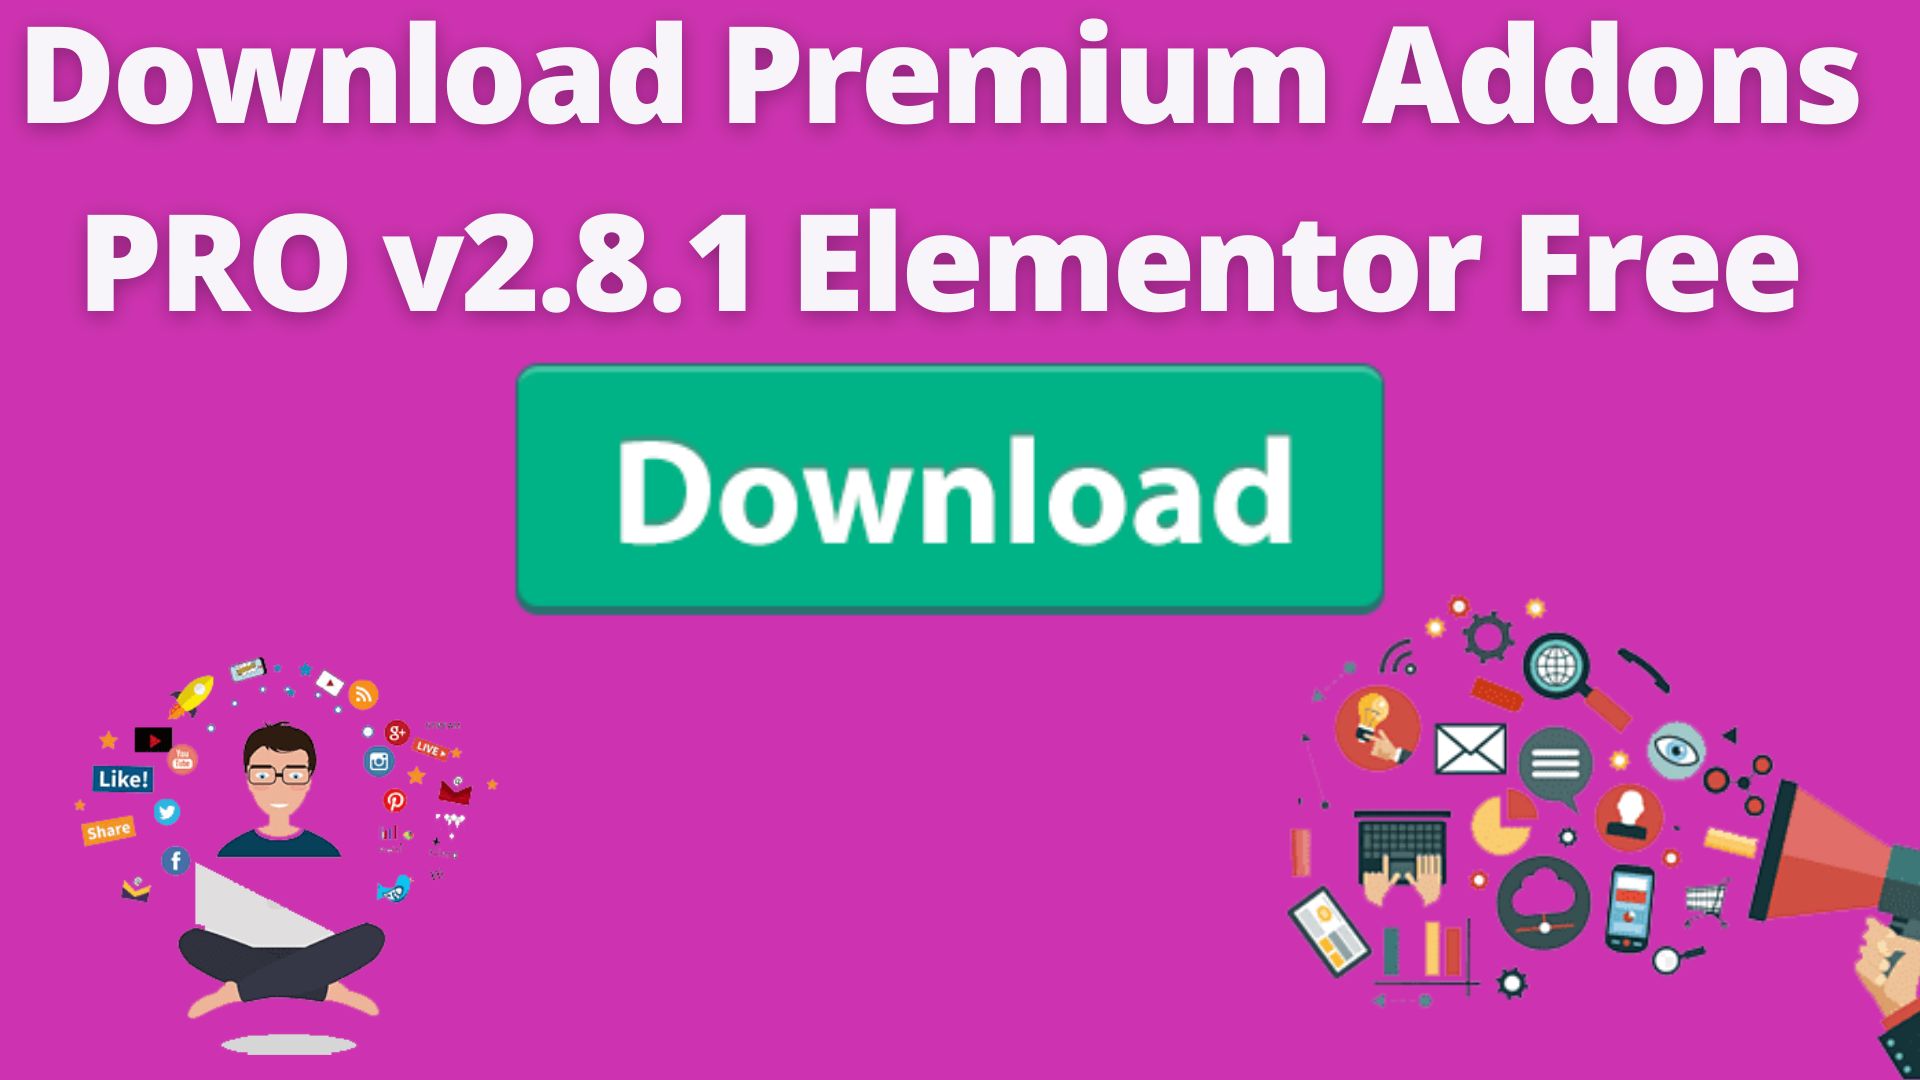 Download Premium Addons Pro V2.8.1 Elementor Free